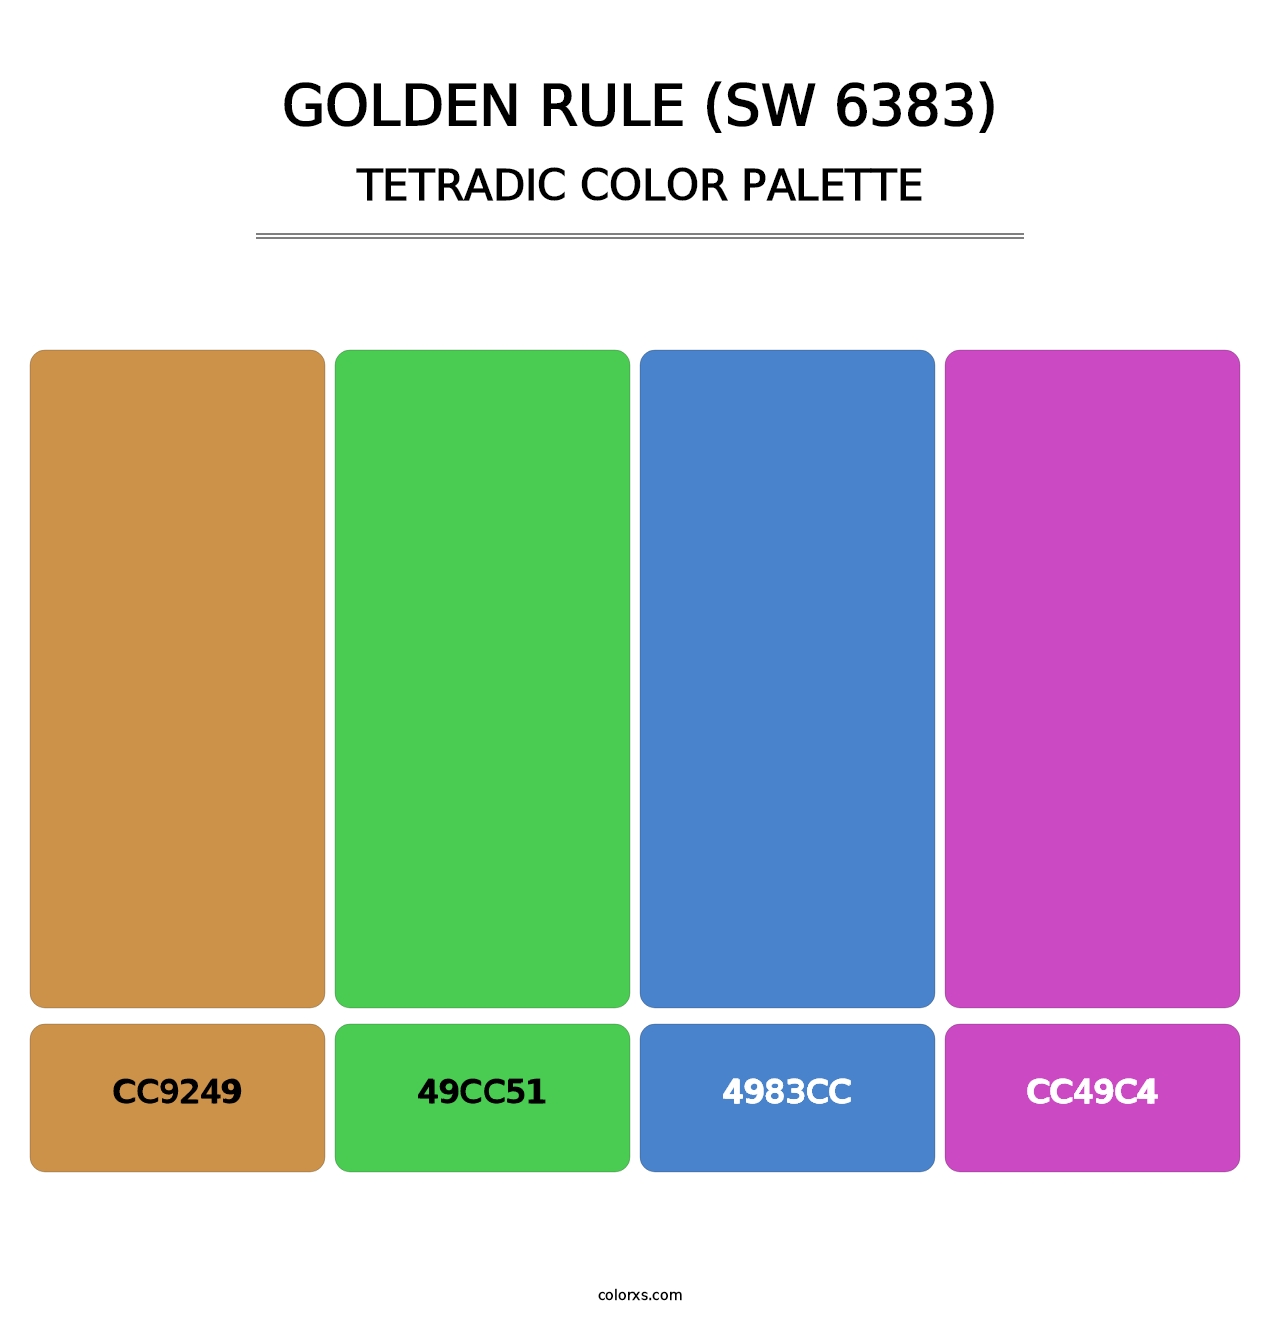 Golden Rule (SW 6383) - Tetradic Color Palette